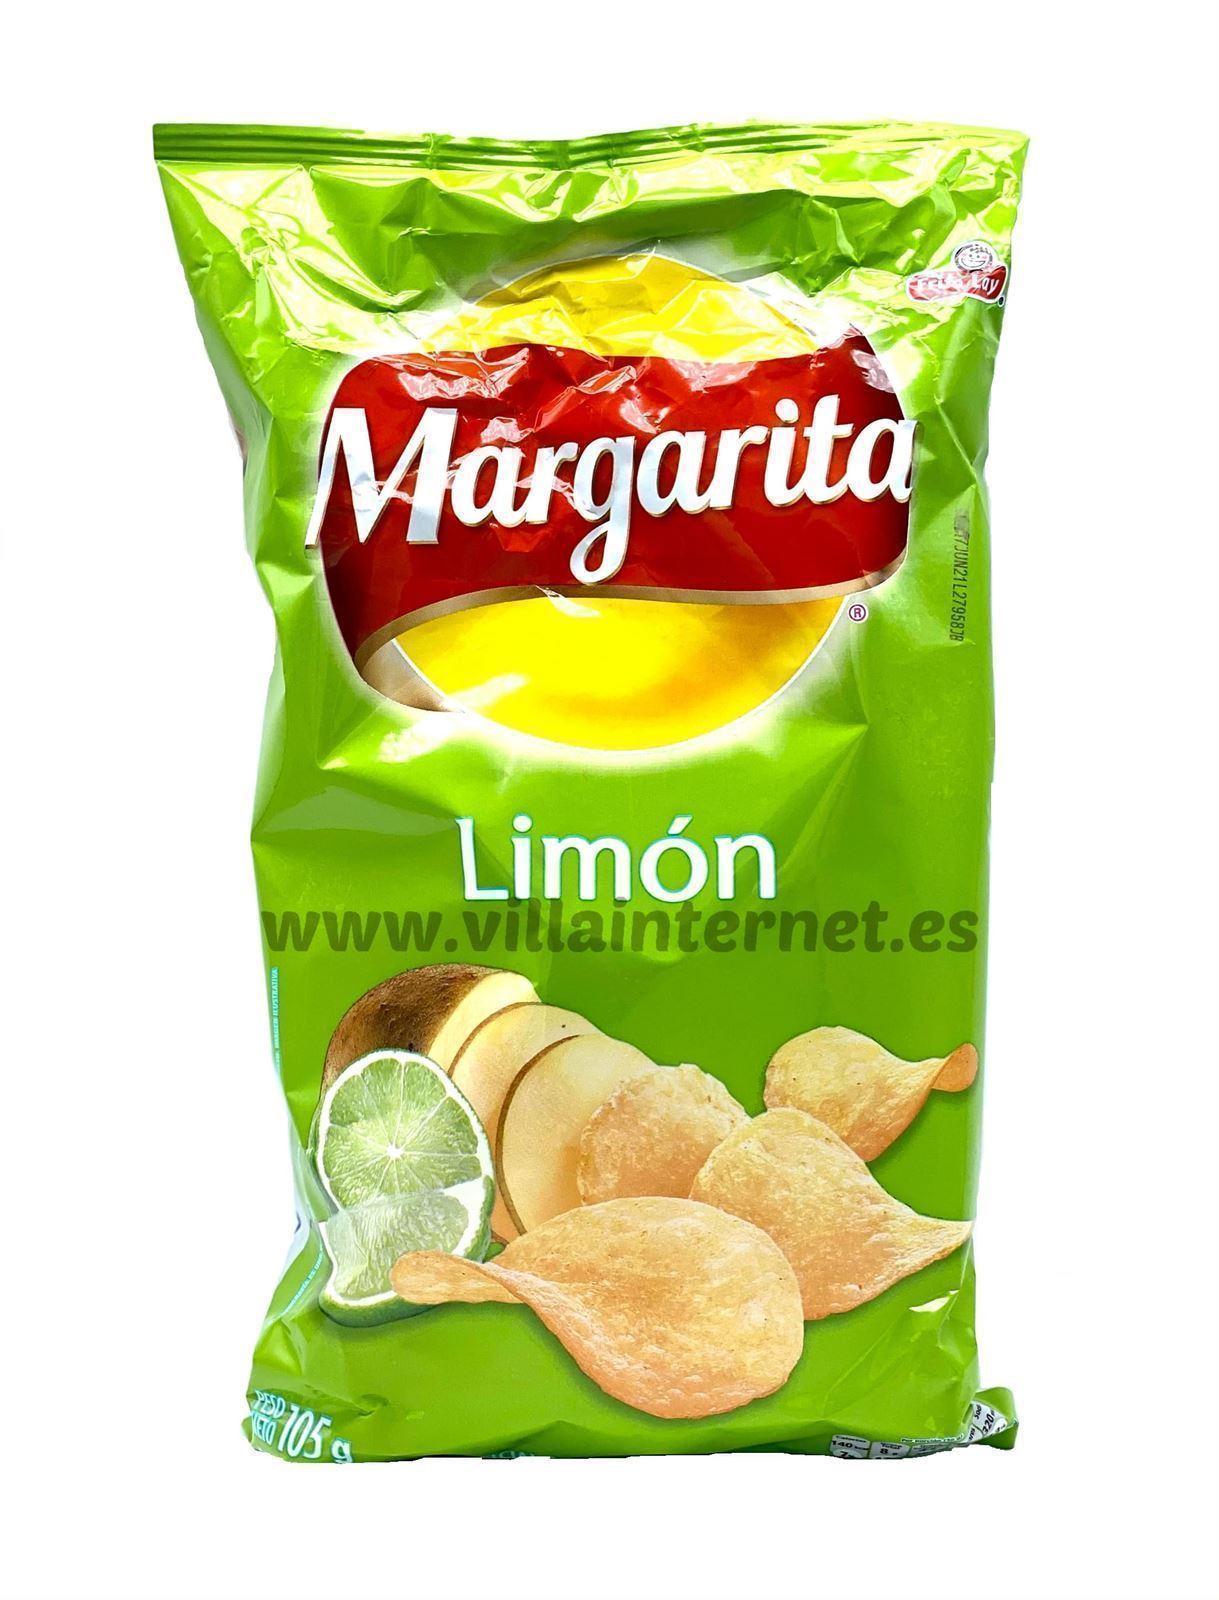 Margarita sabor limón 105g - Imagen 1